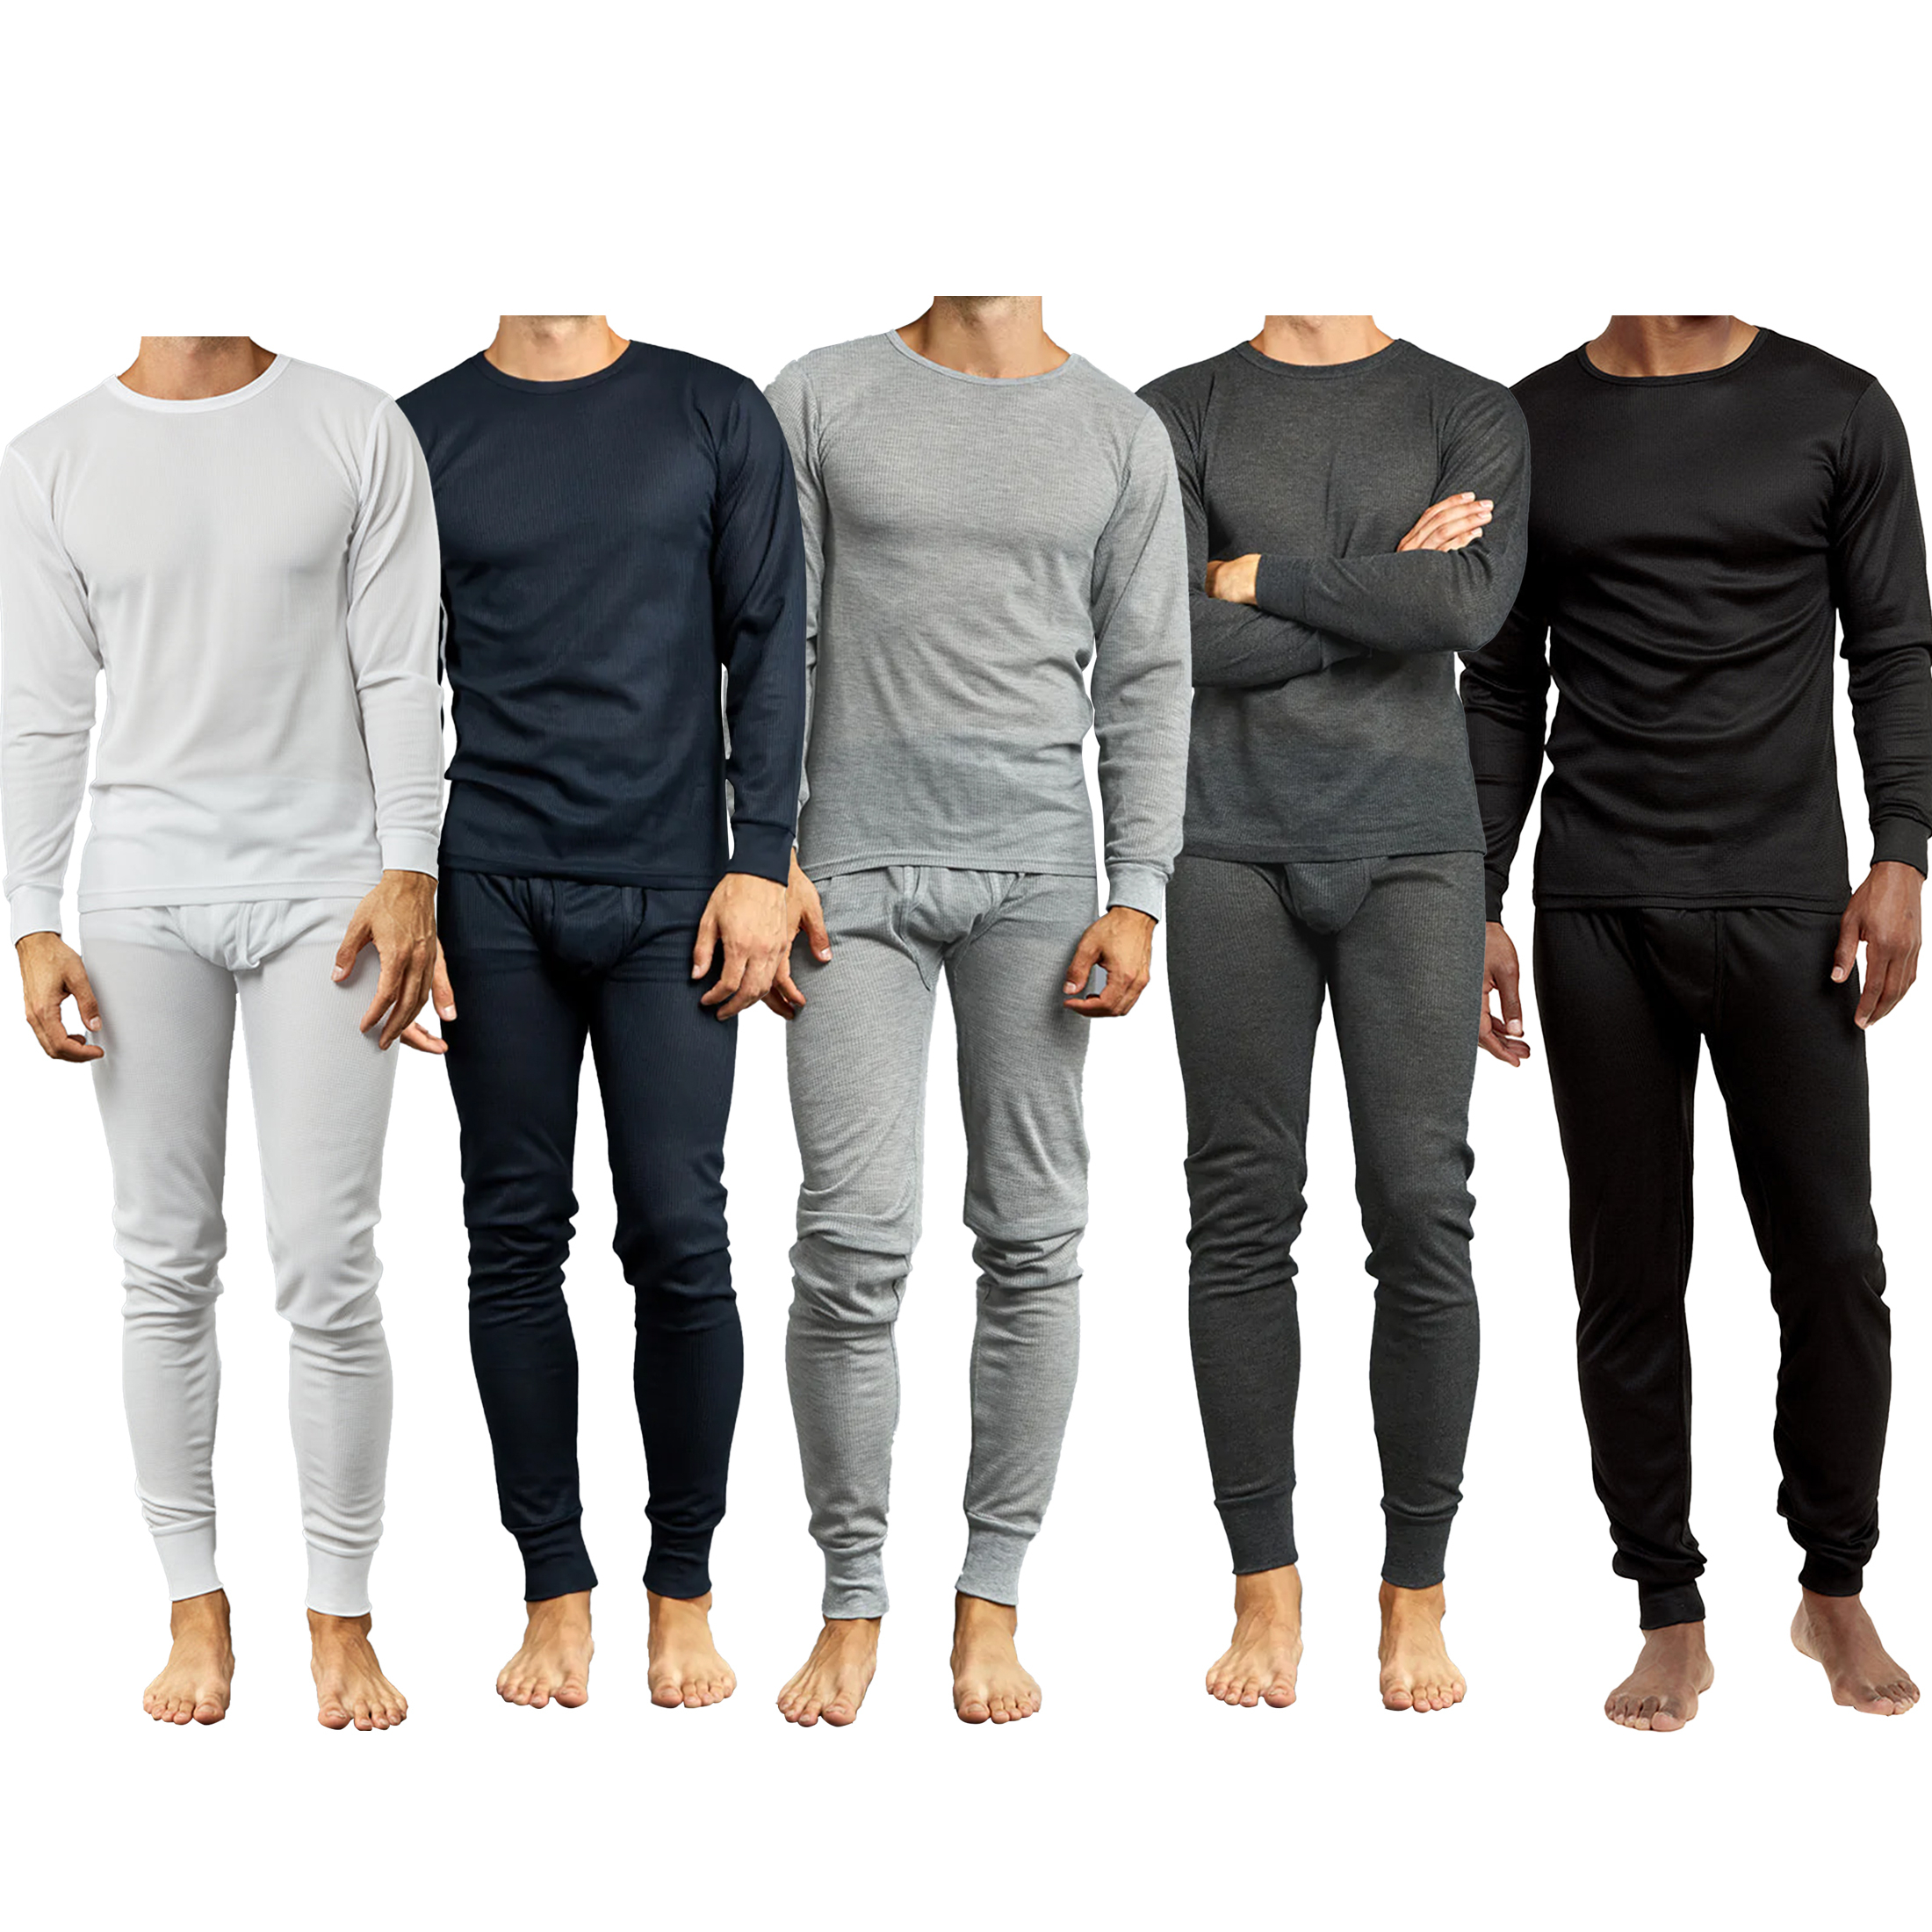 2-Piece: Men's Moisture Wicking Long Johns Base Layer Thermal Underwear Set (Top & Bottom) - Black, Large